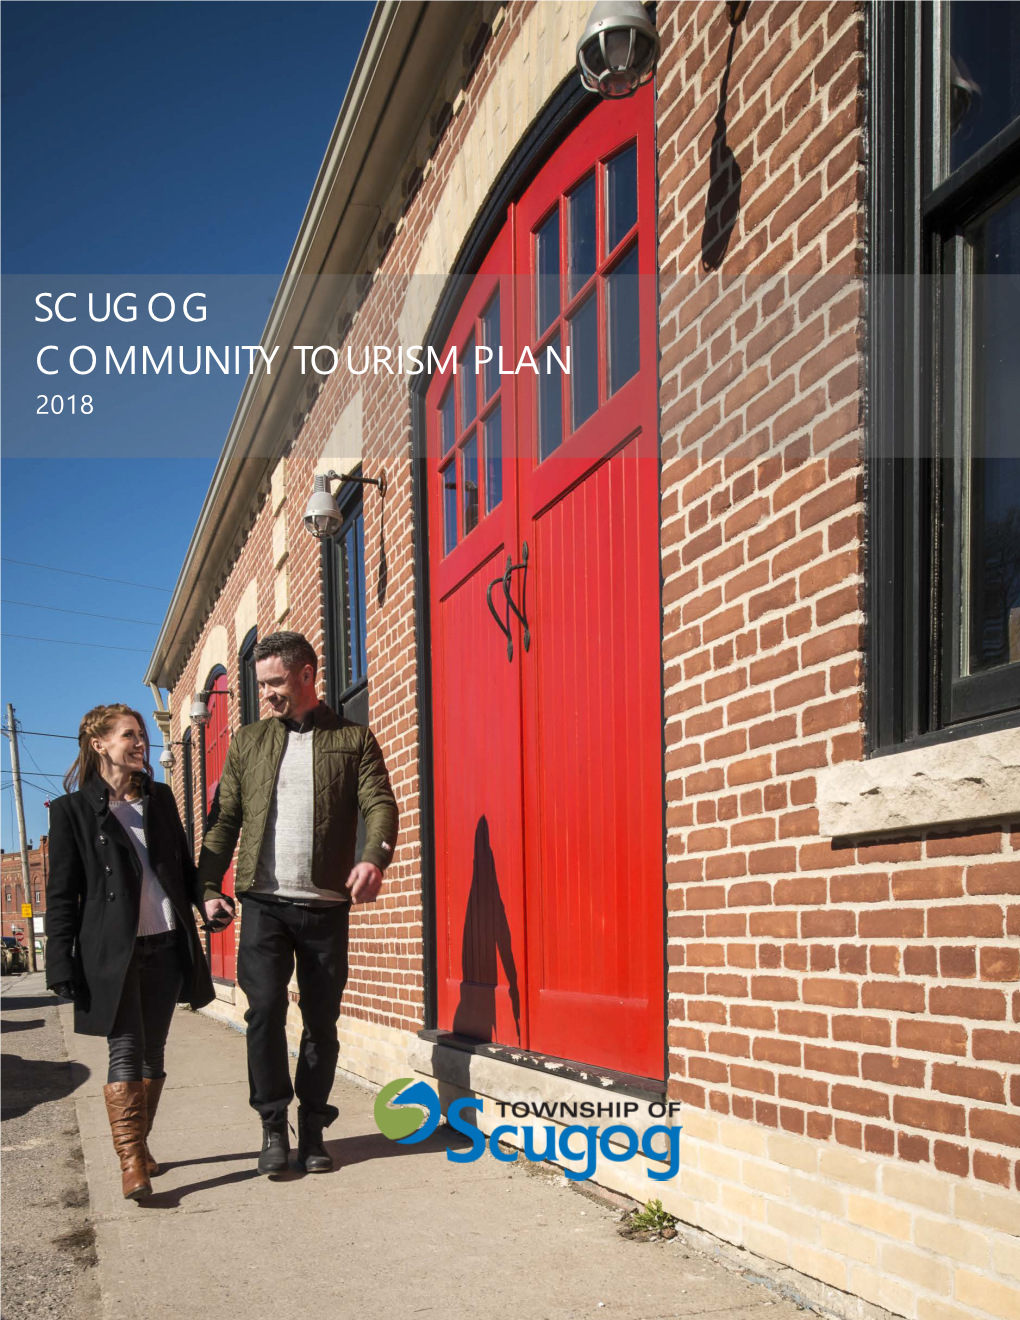 Scugog Community Tourism Plan 2018